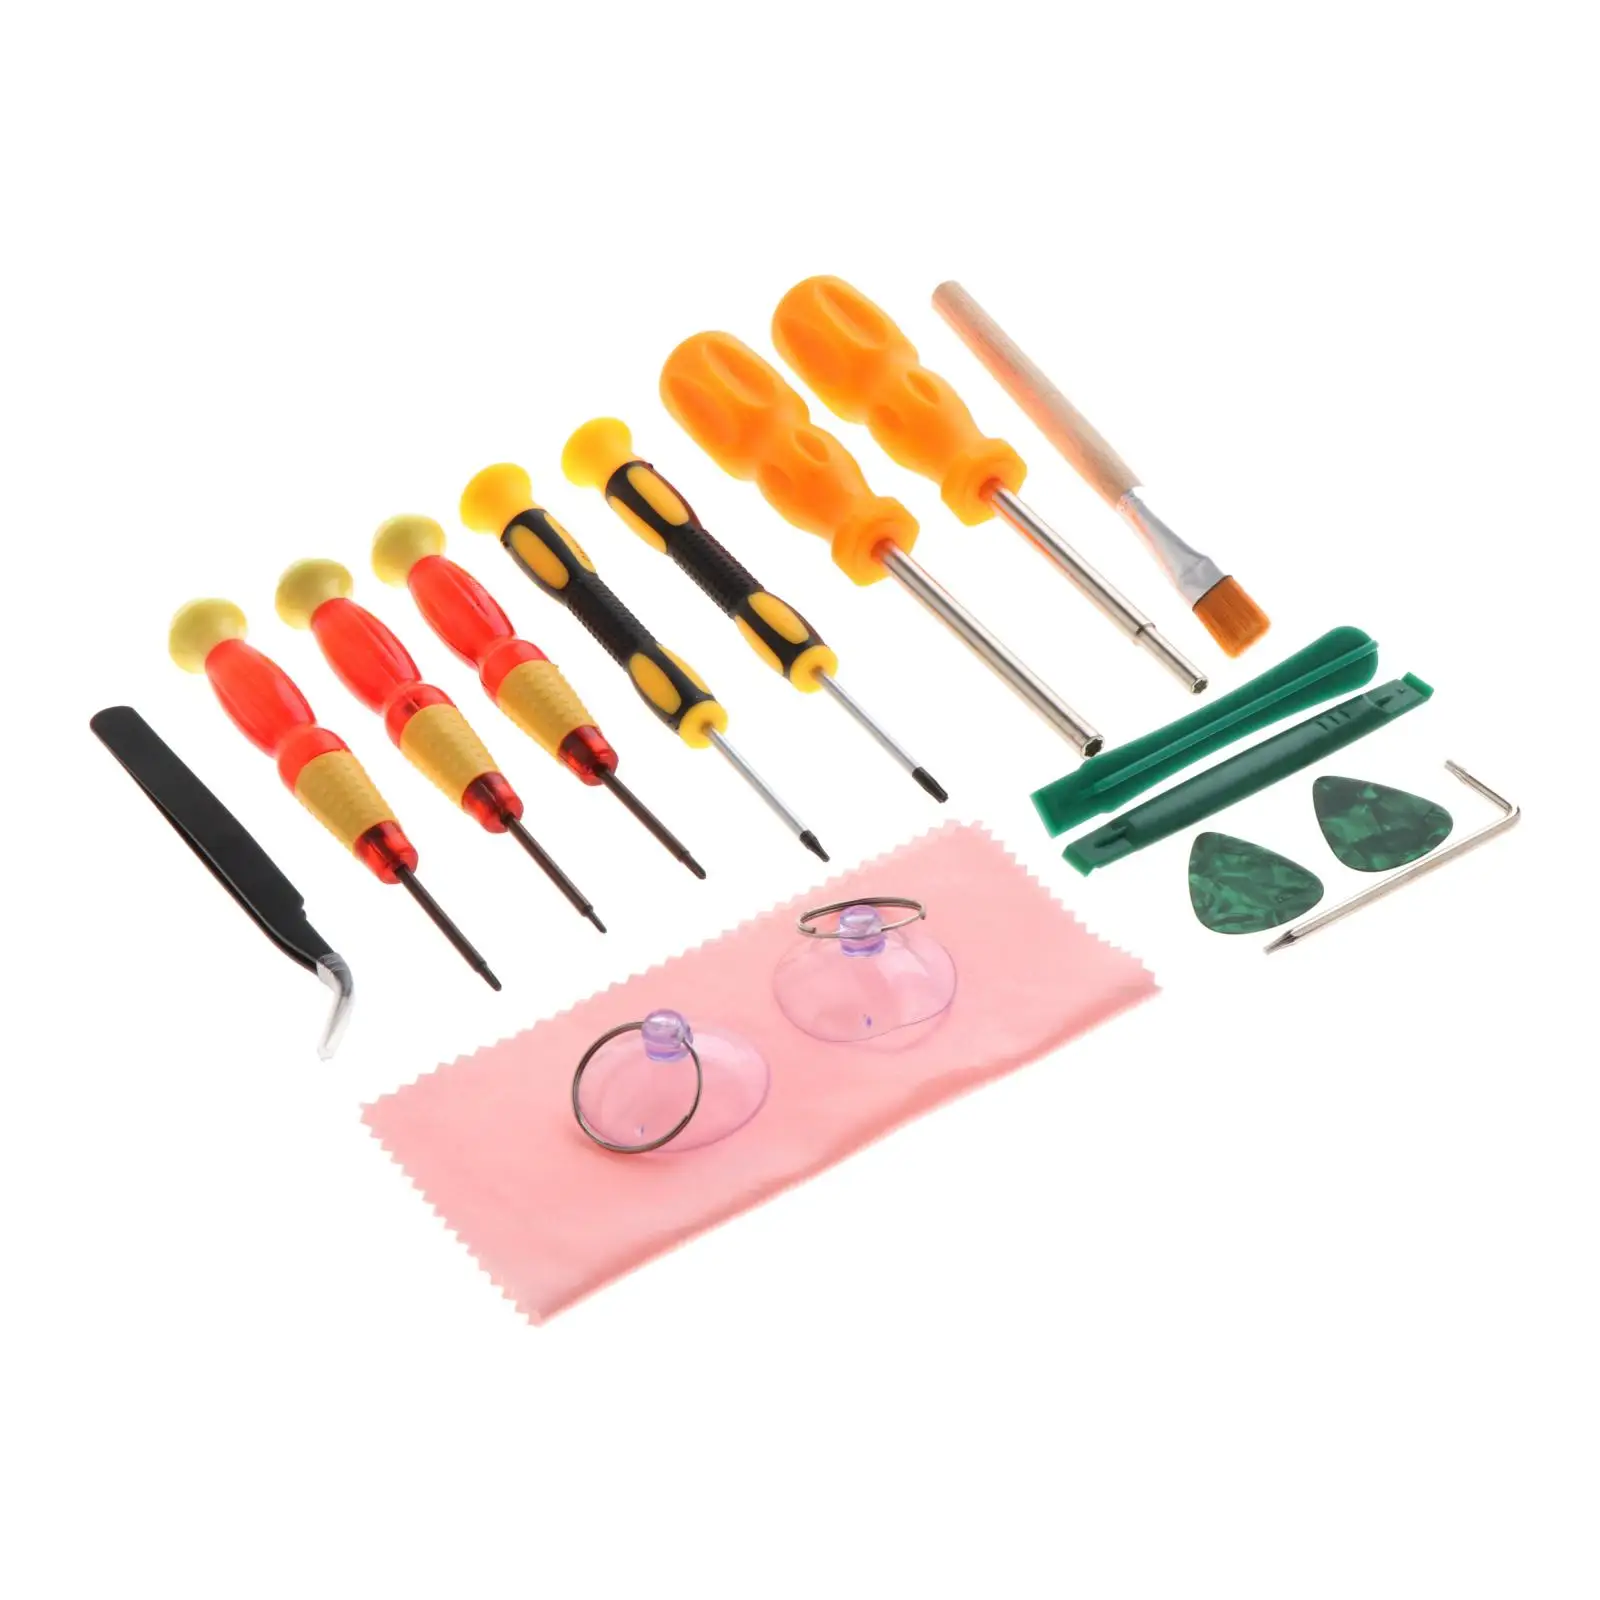 17 in 1 Precision Screwdriver Repair Kit Screwdriver Tool Set with Tweezer Cleaning Brush Cleaning Cloth Repair Hand Tool